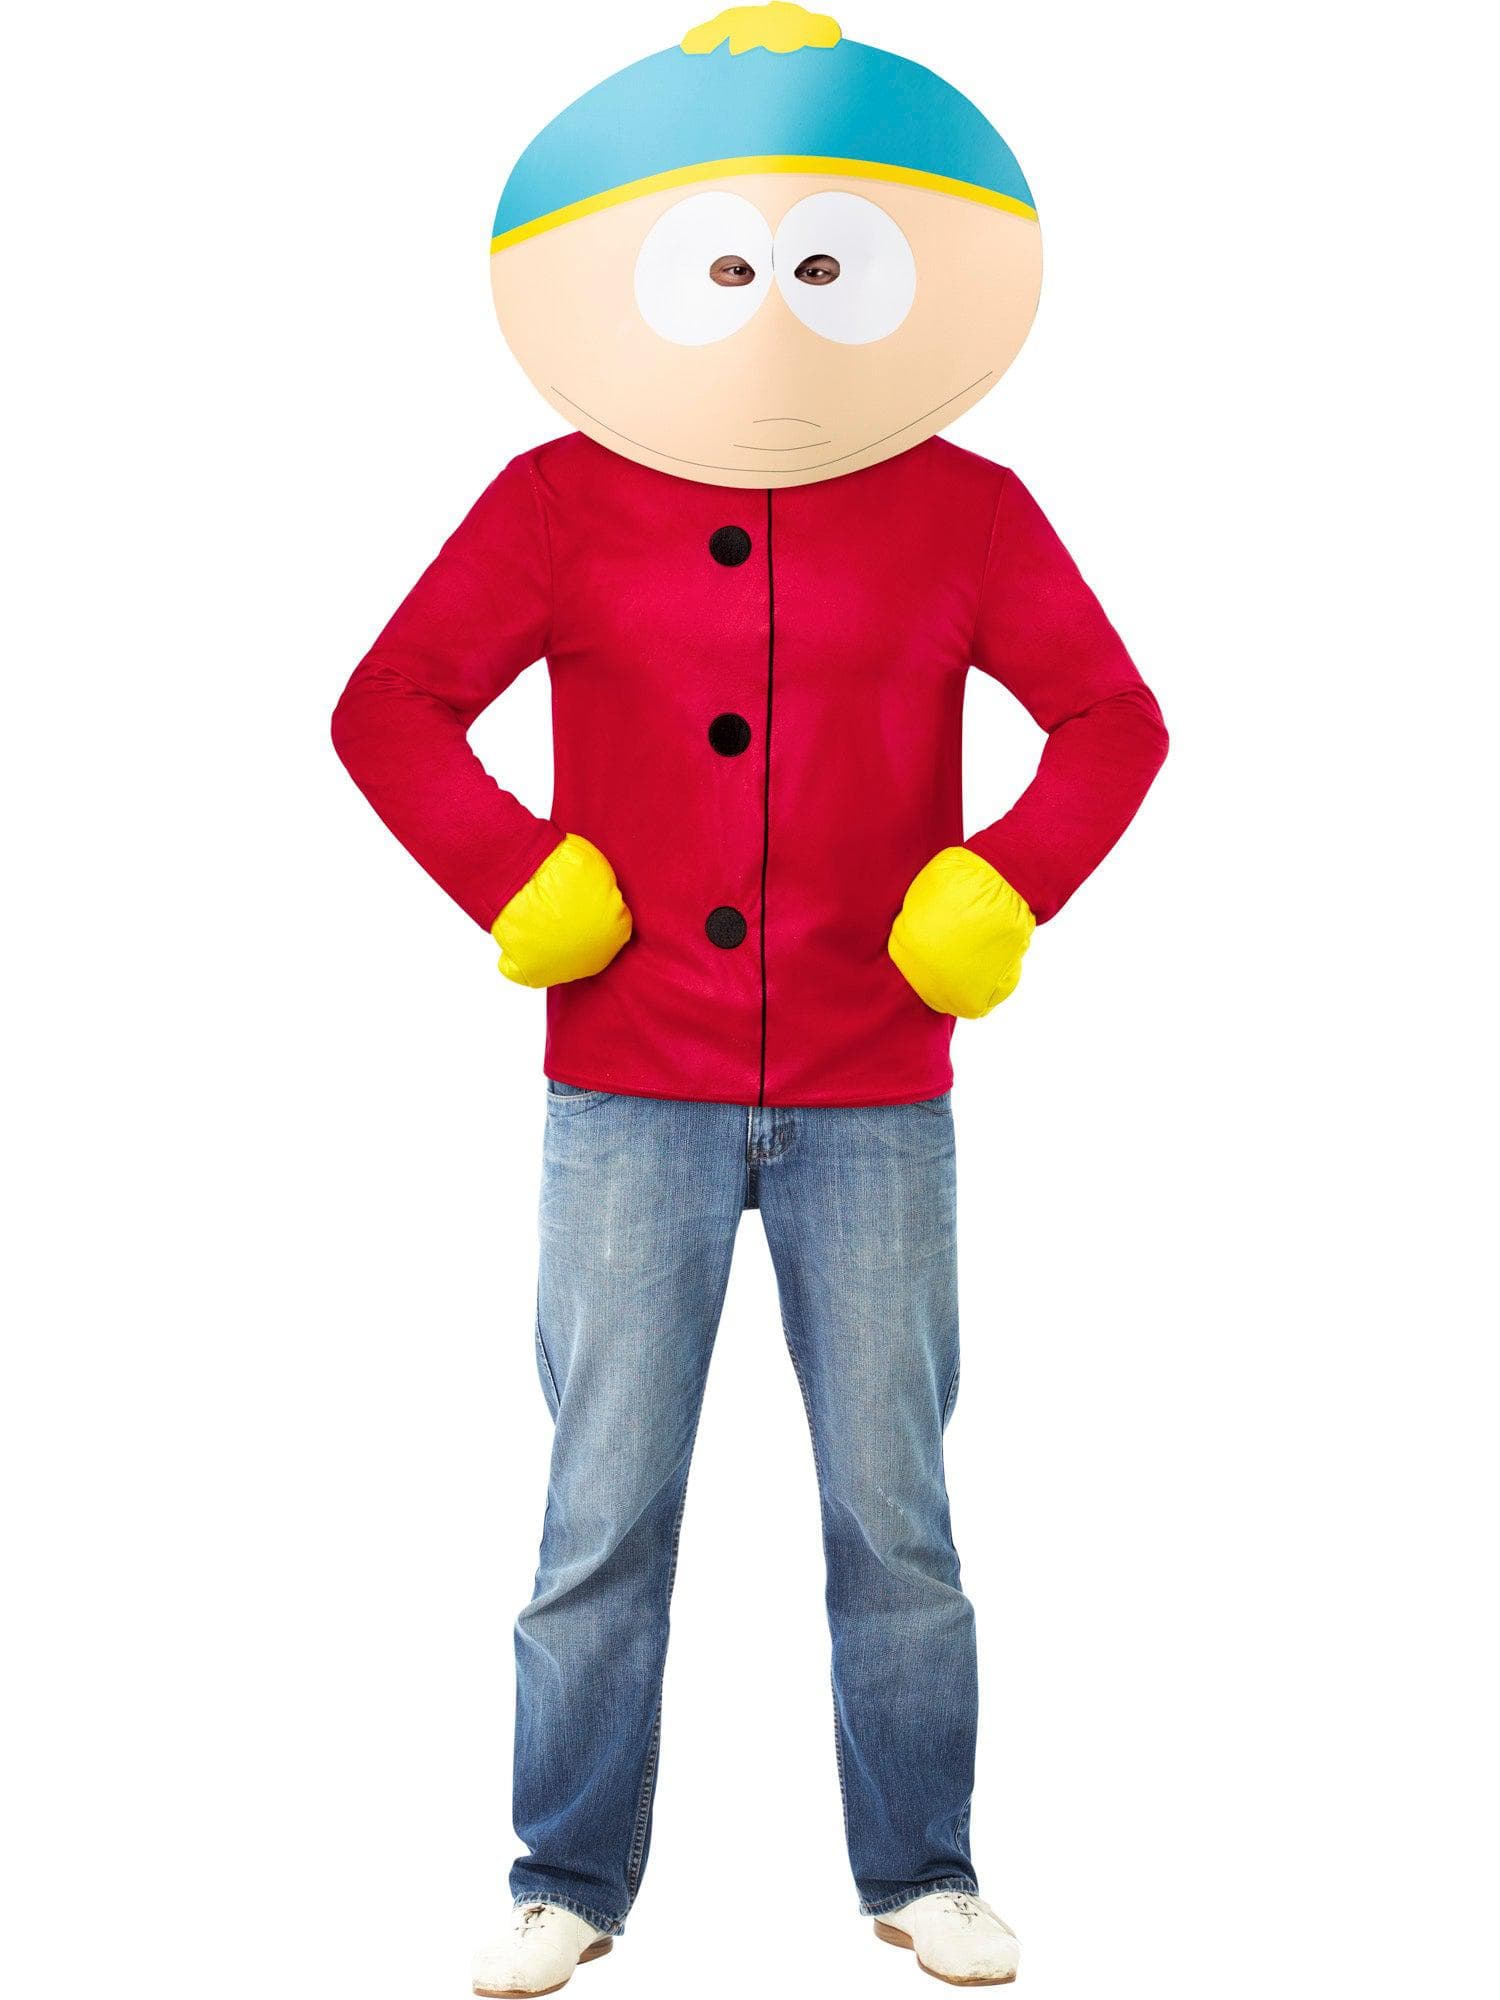 South Park Cartman Adult Costume - costumes.com